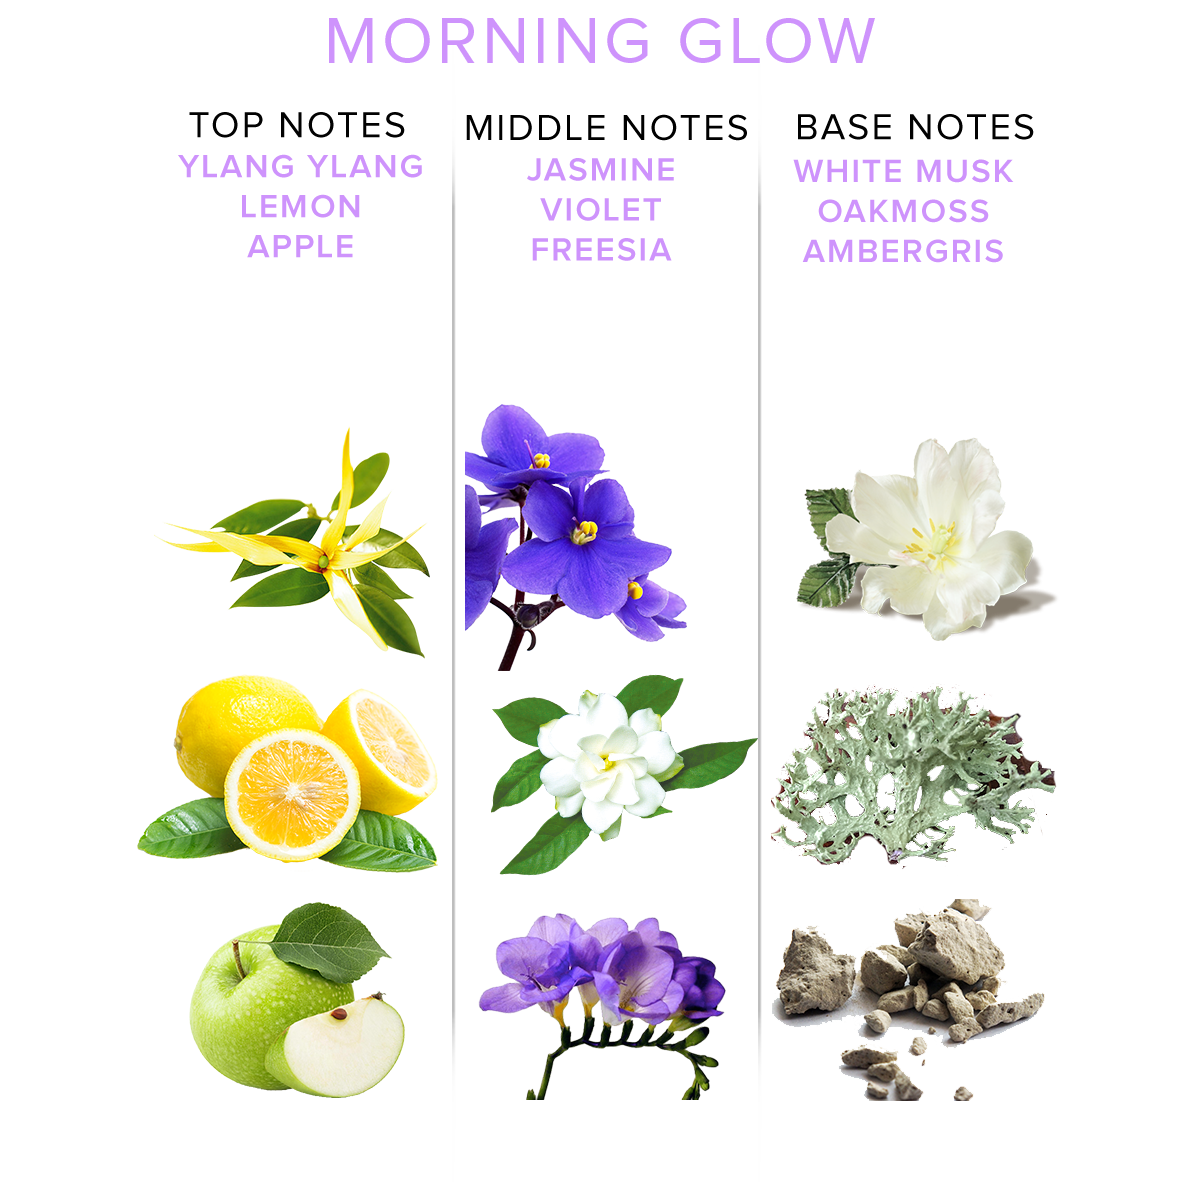 Morning Glow Pheromone Perfume